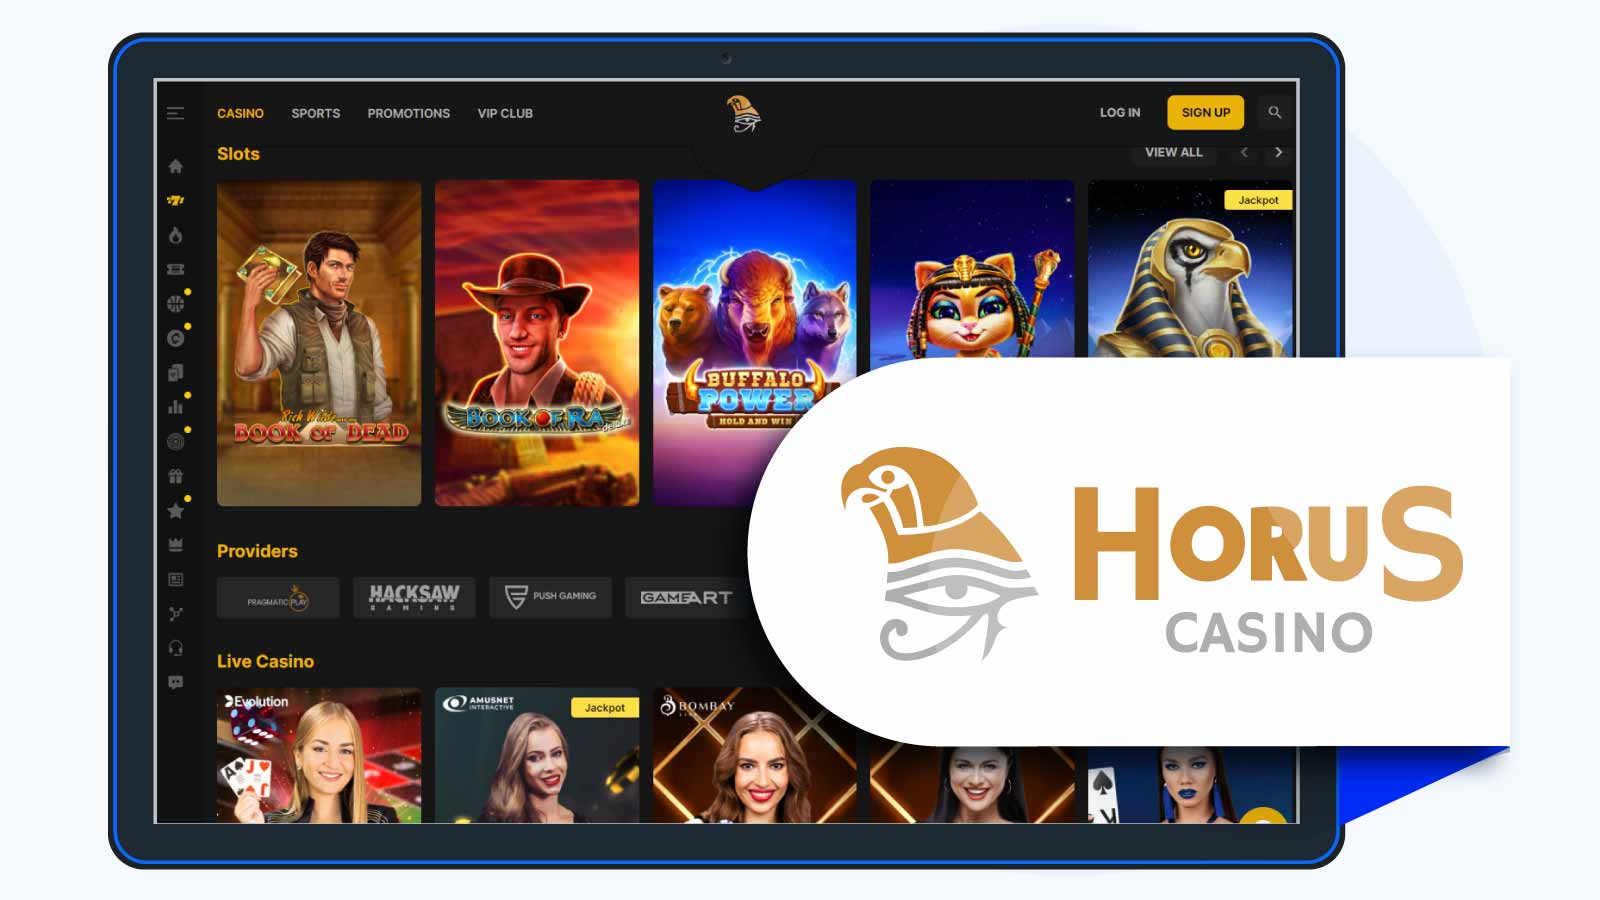 Horus Casino – Best for slots